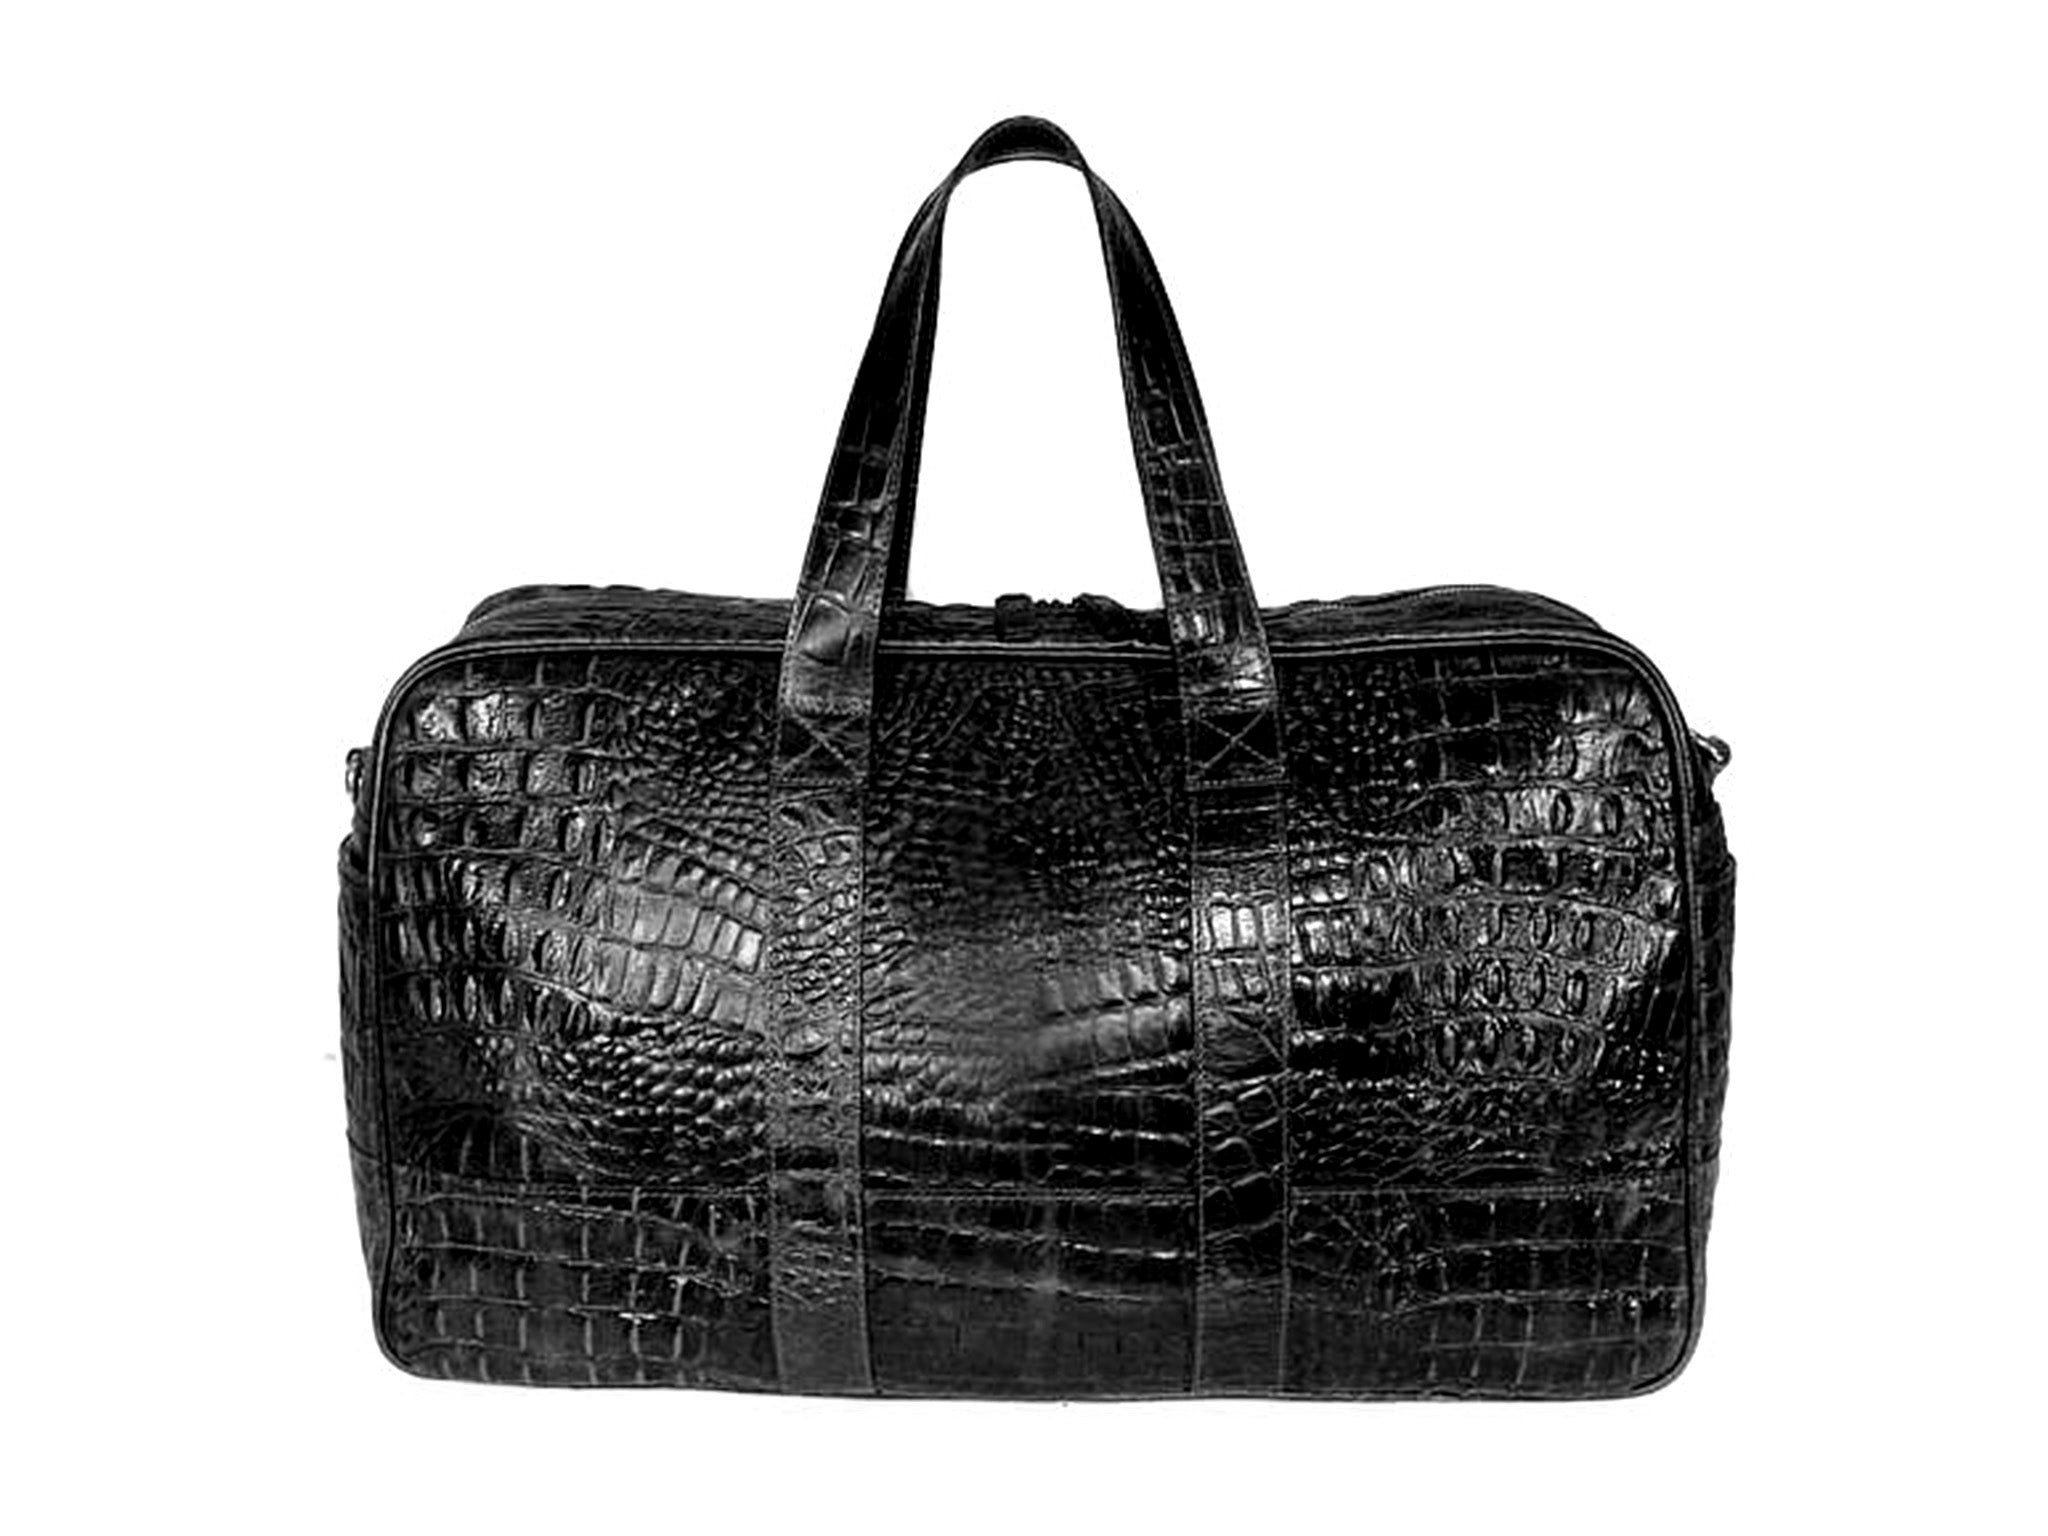 Everglades Luxury Travel Bag Black